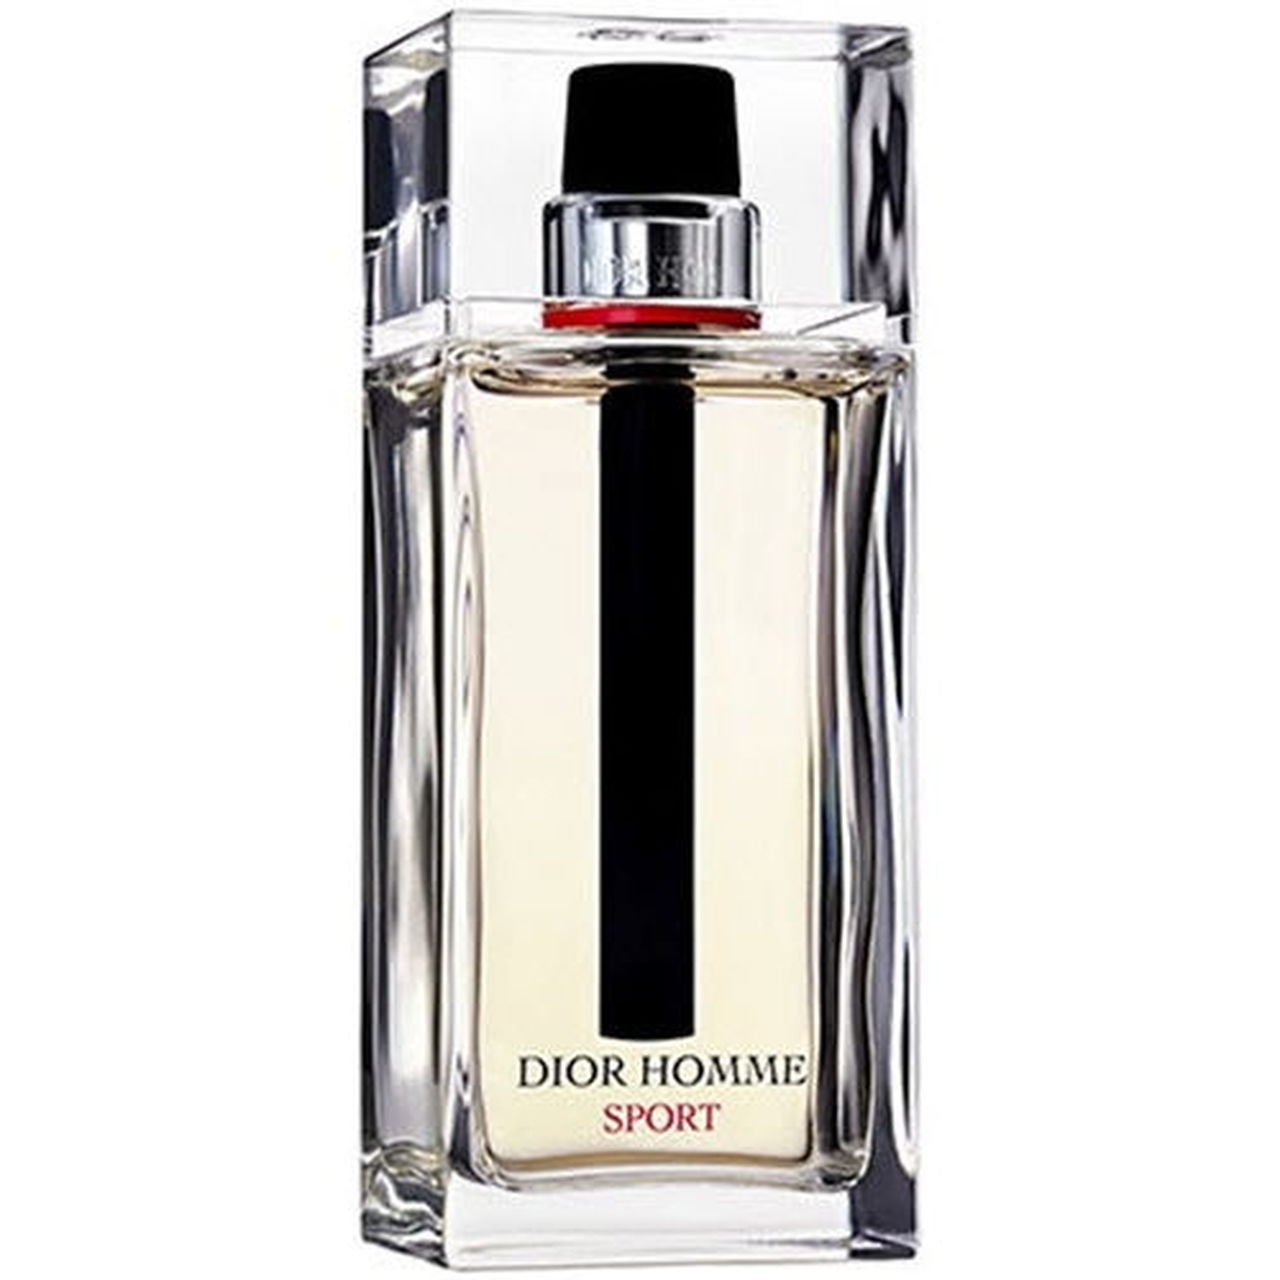 Dior Homme Sport Eau De Toilette Spray 10ml - LookincredibleDior3348901580069